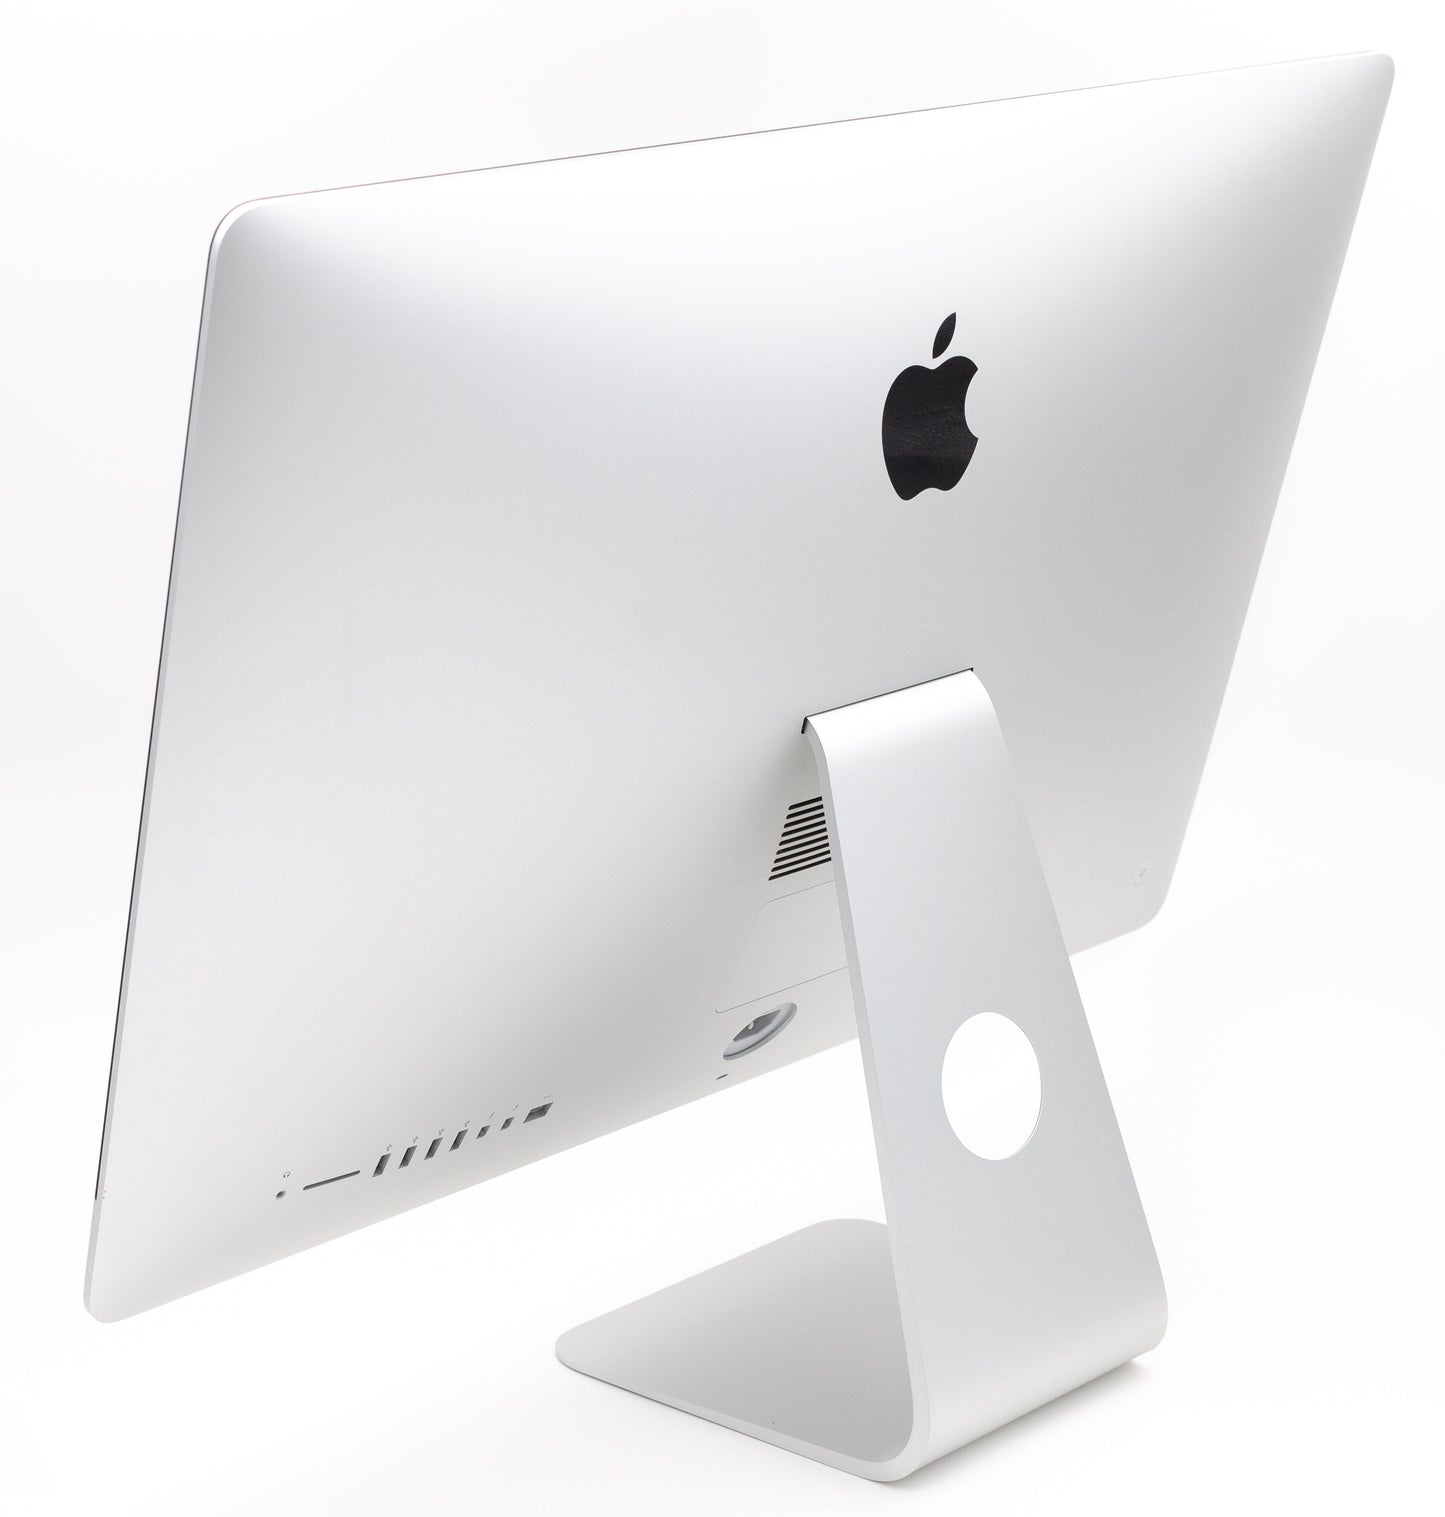 apple-late-2012-27-inch-imac-ultra-thin-a1419-aluminum-qci5 - 2.9ghz, 8gb ram, gtx 660m - 512mb gpu-2